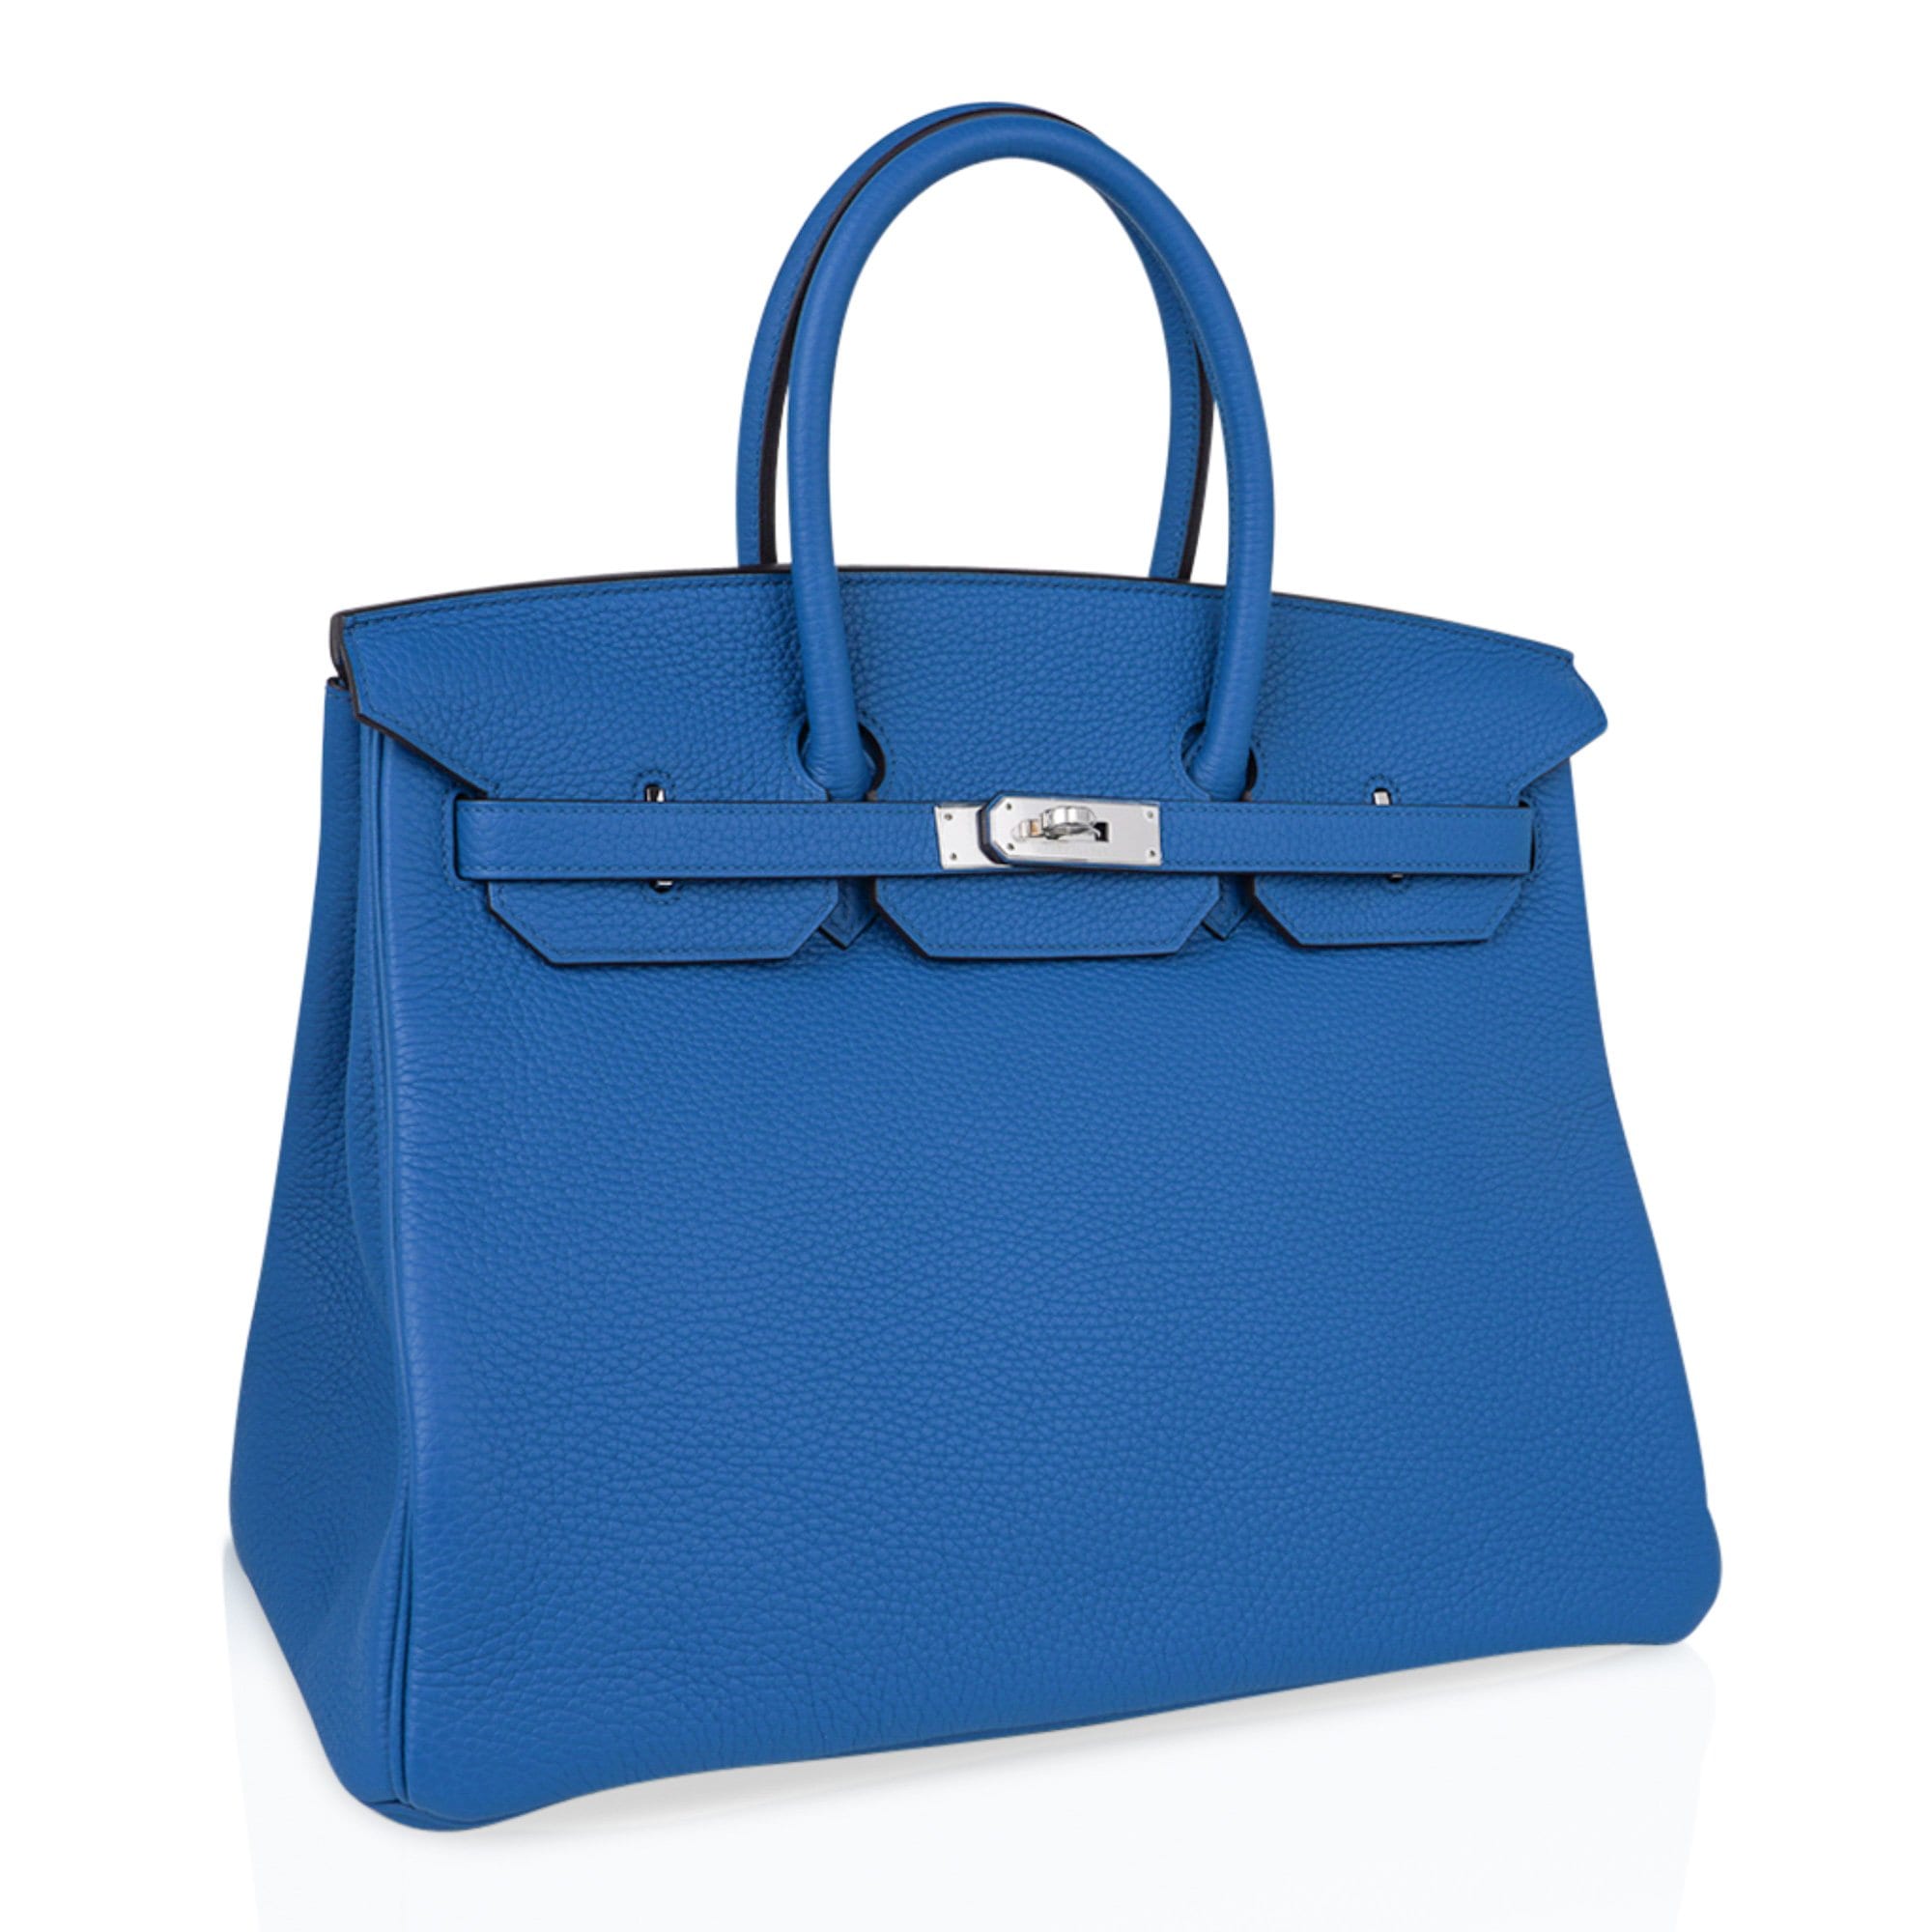 Bolide 35 Blue Jean Clemence Bag Palladium Hardware